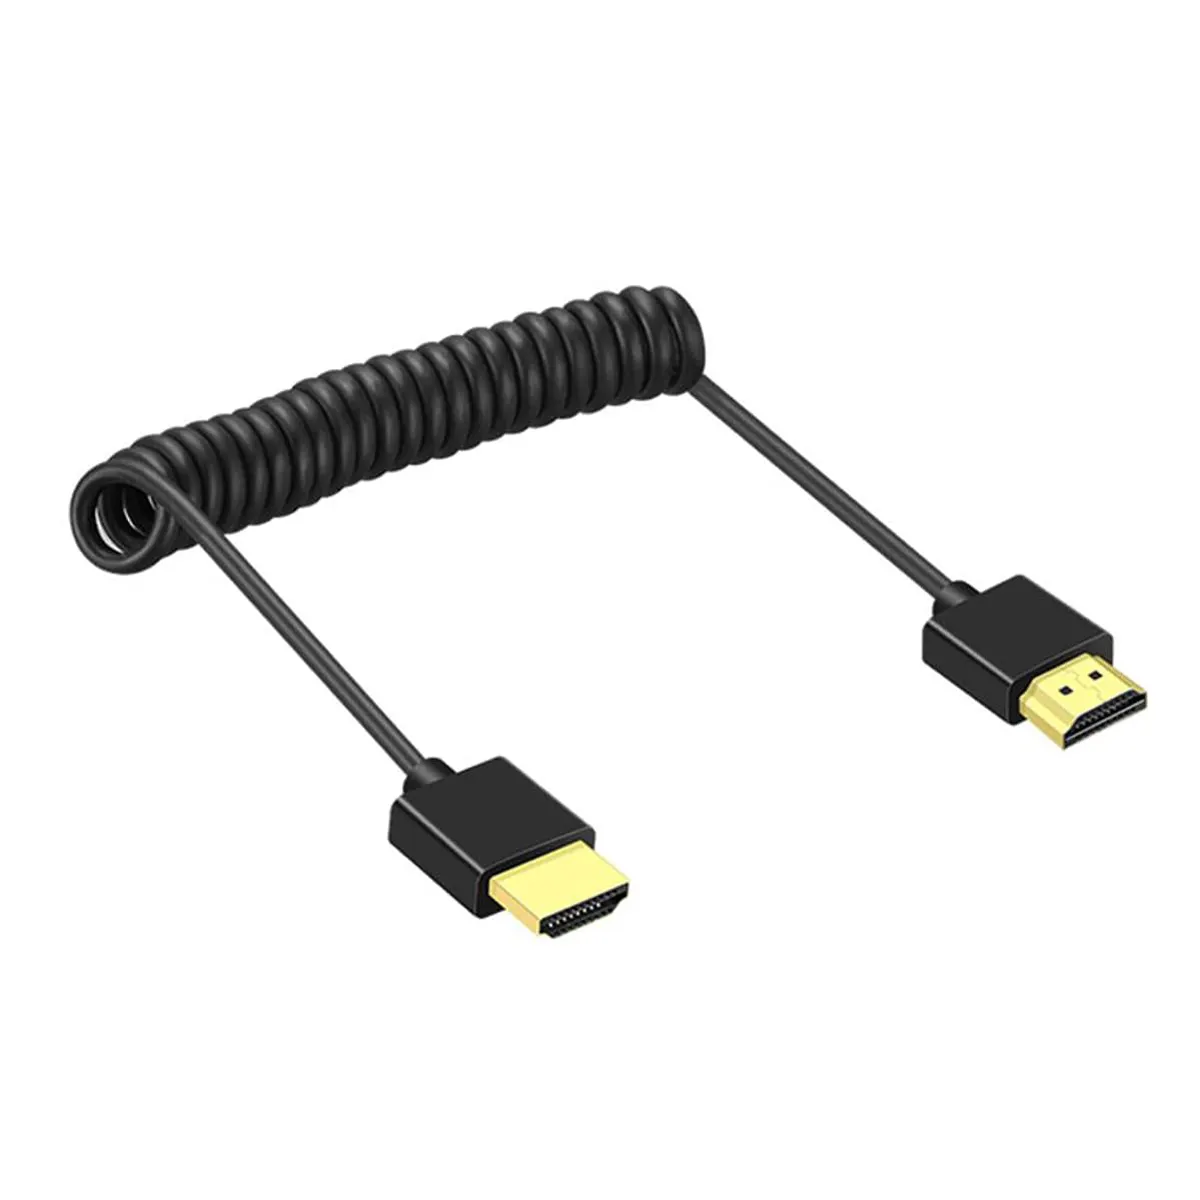 Kabel Lunak Tipis Sesuai HDMI 4K 2.0 60P, Kabel Lunak Kecepatan Tinggi untuk Tablet Z Cam E2, Monitor Port ATOMOS Kamera DSLR Sony